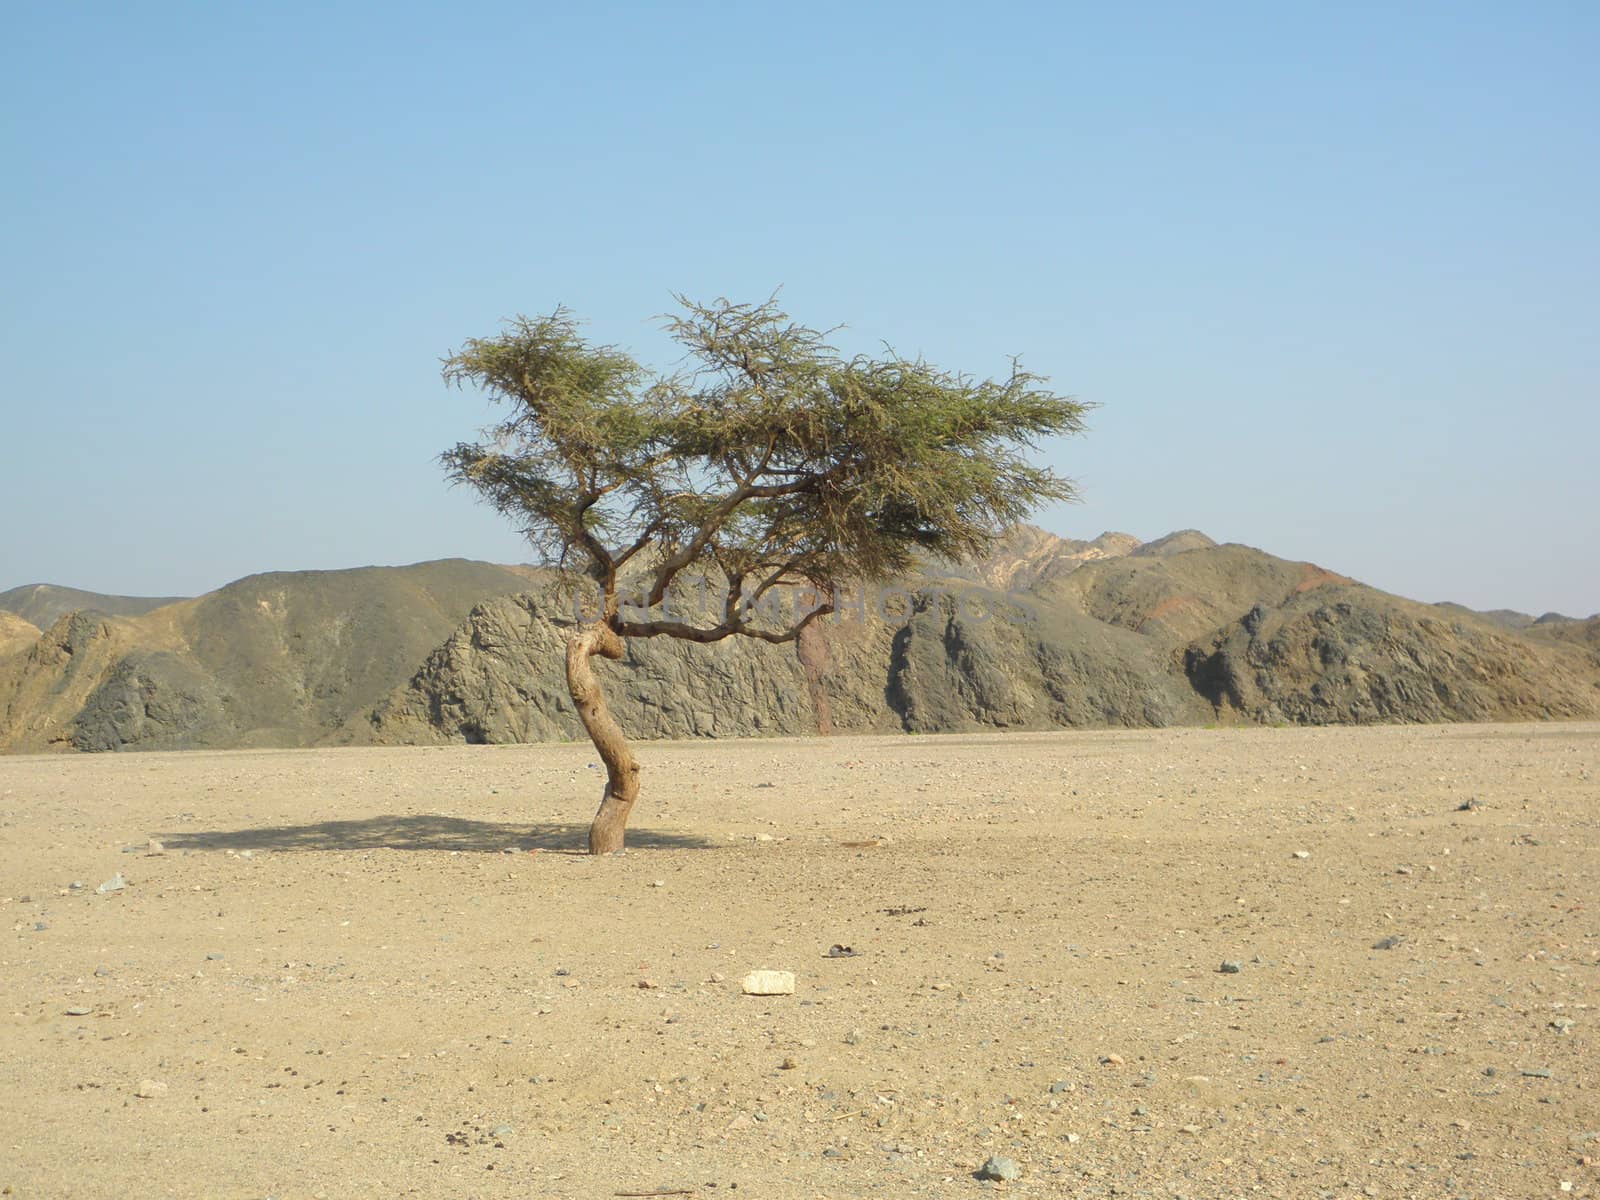 solitary Acacia in the Sahara